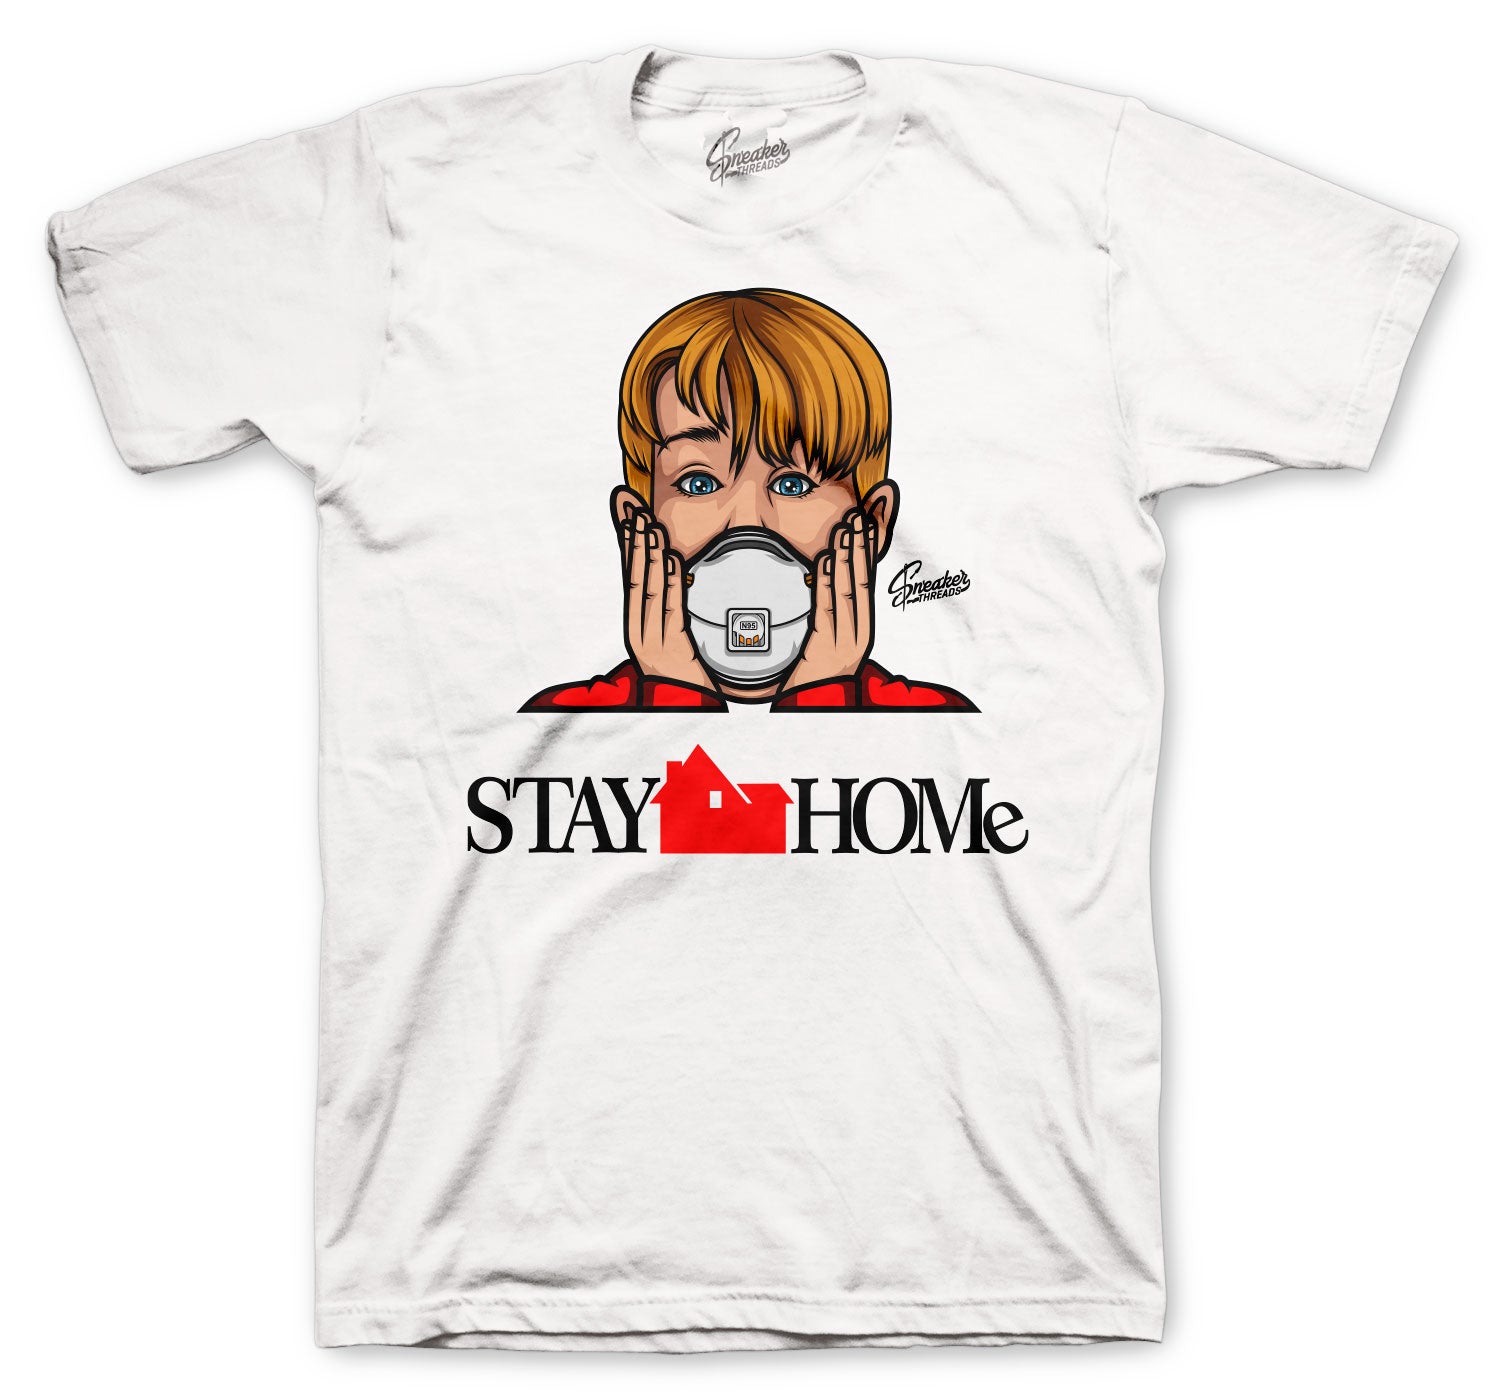 Dunk SB Chicago Shirt - Stay Home - White